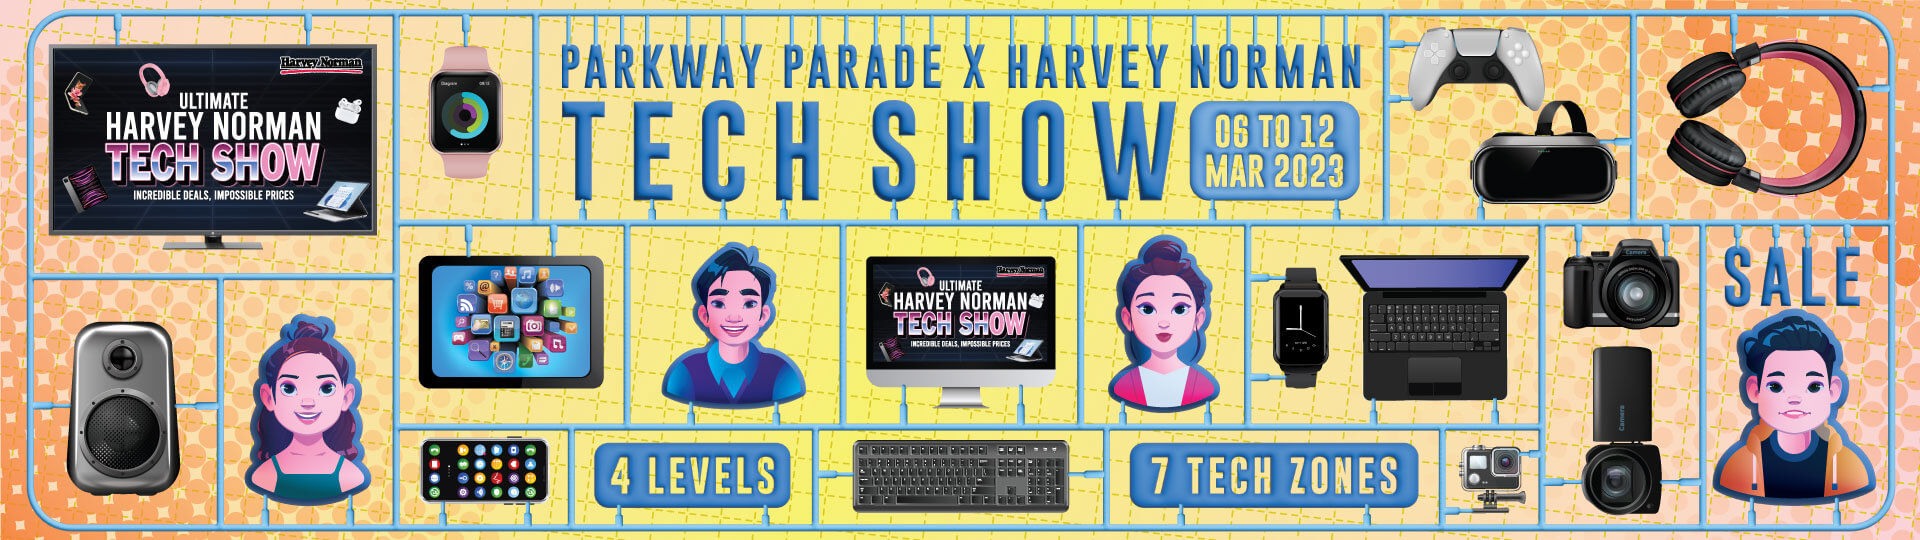 Parkway Parade x Harvey Norman Tech Show